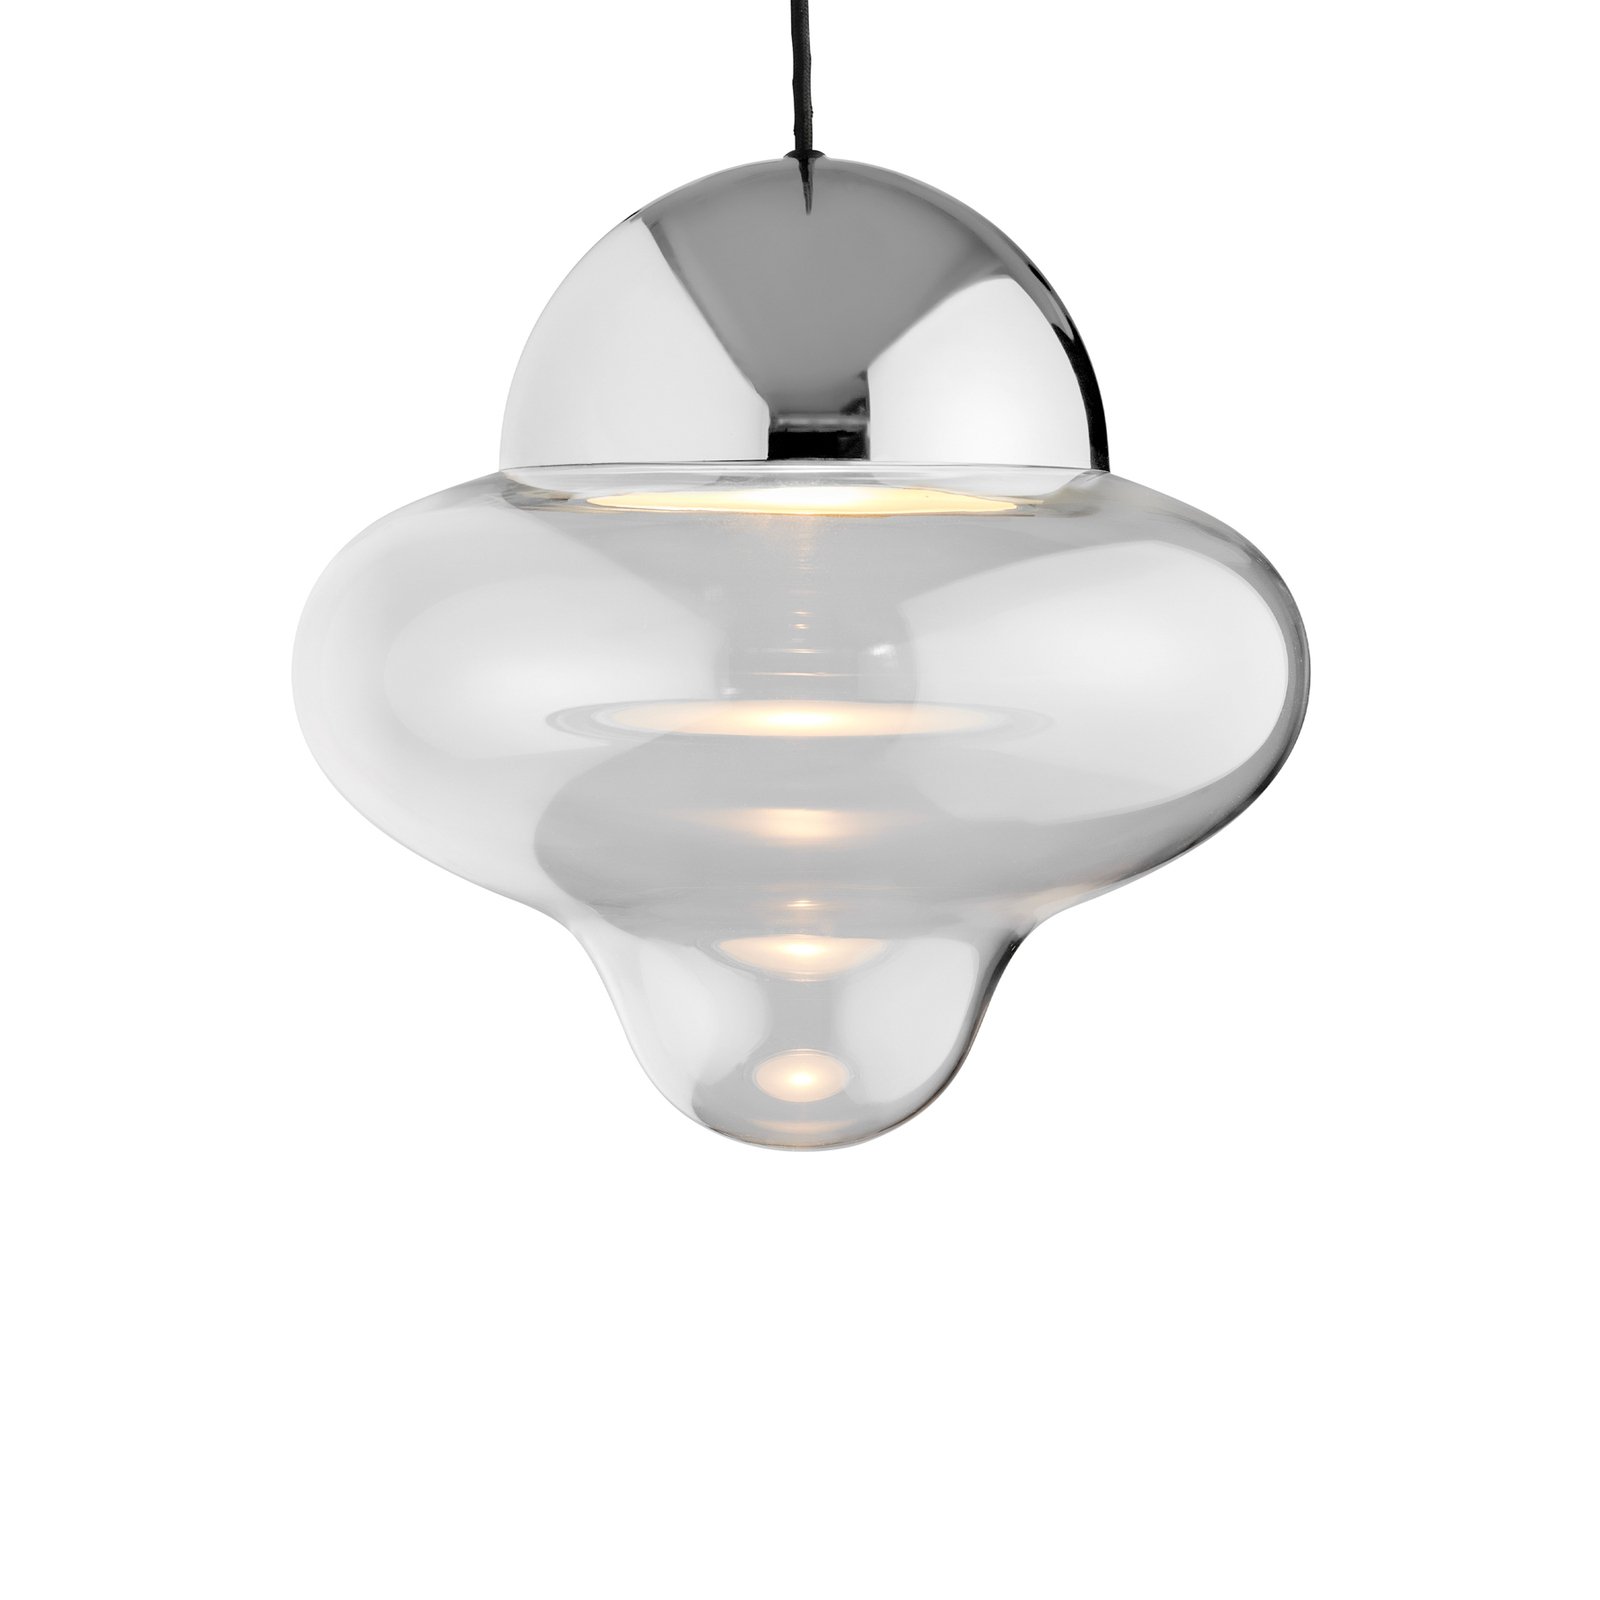 Hanglamp Nutty XL, helder / chroomkleurig, Ø 30 cm, glas